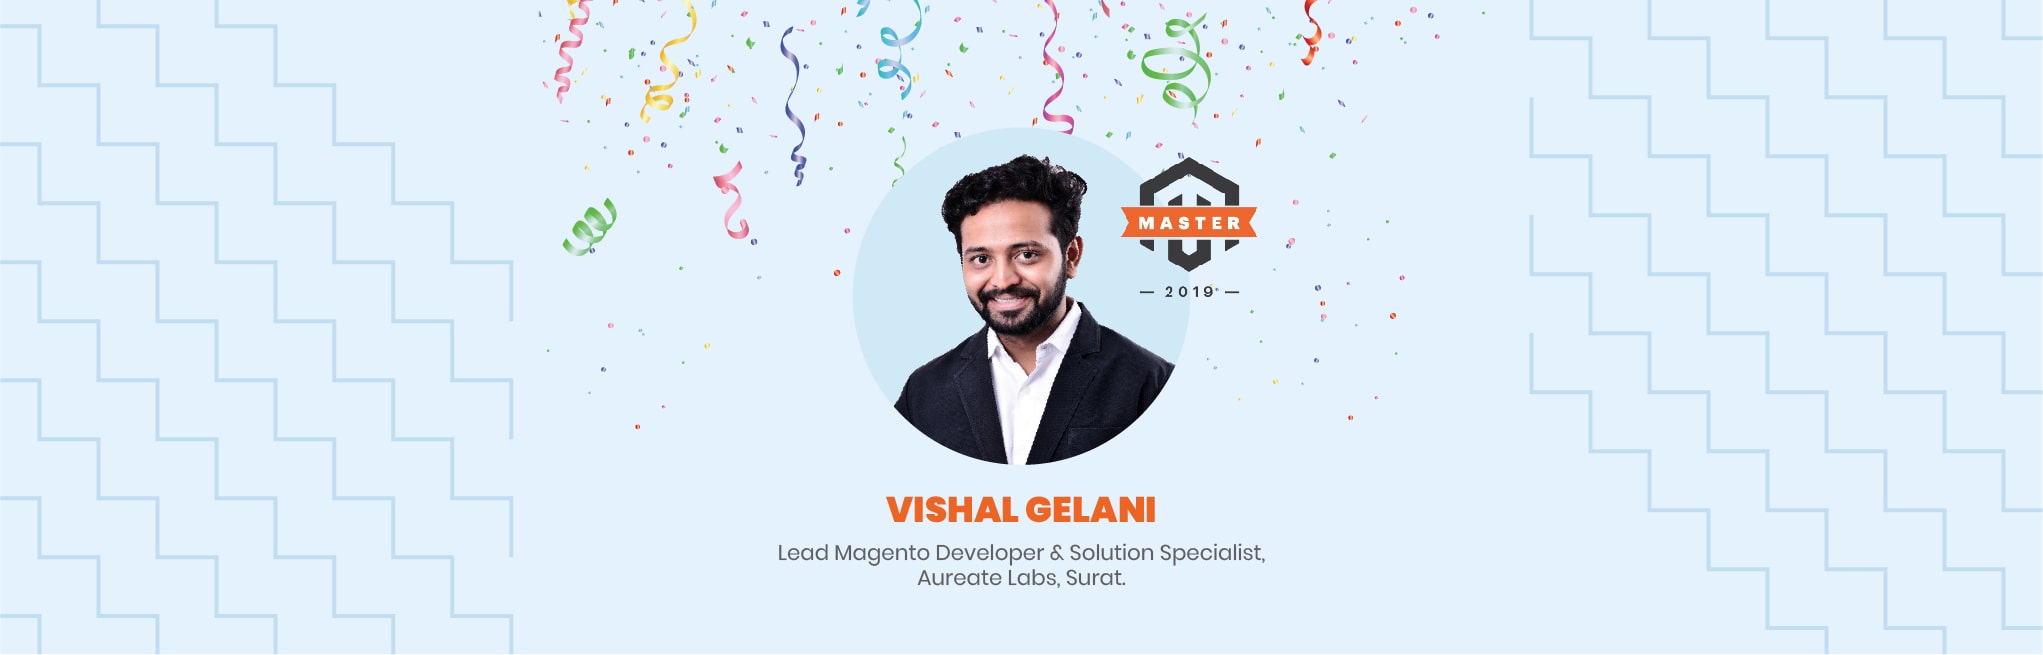 banner-Meet-Magento-Master-2019-Vishal-Gelani